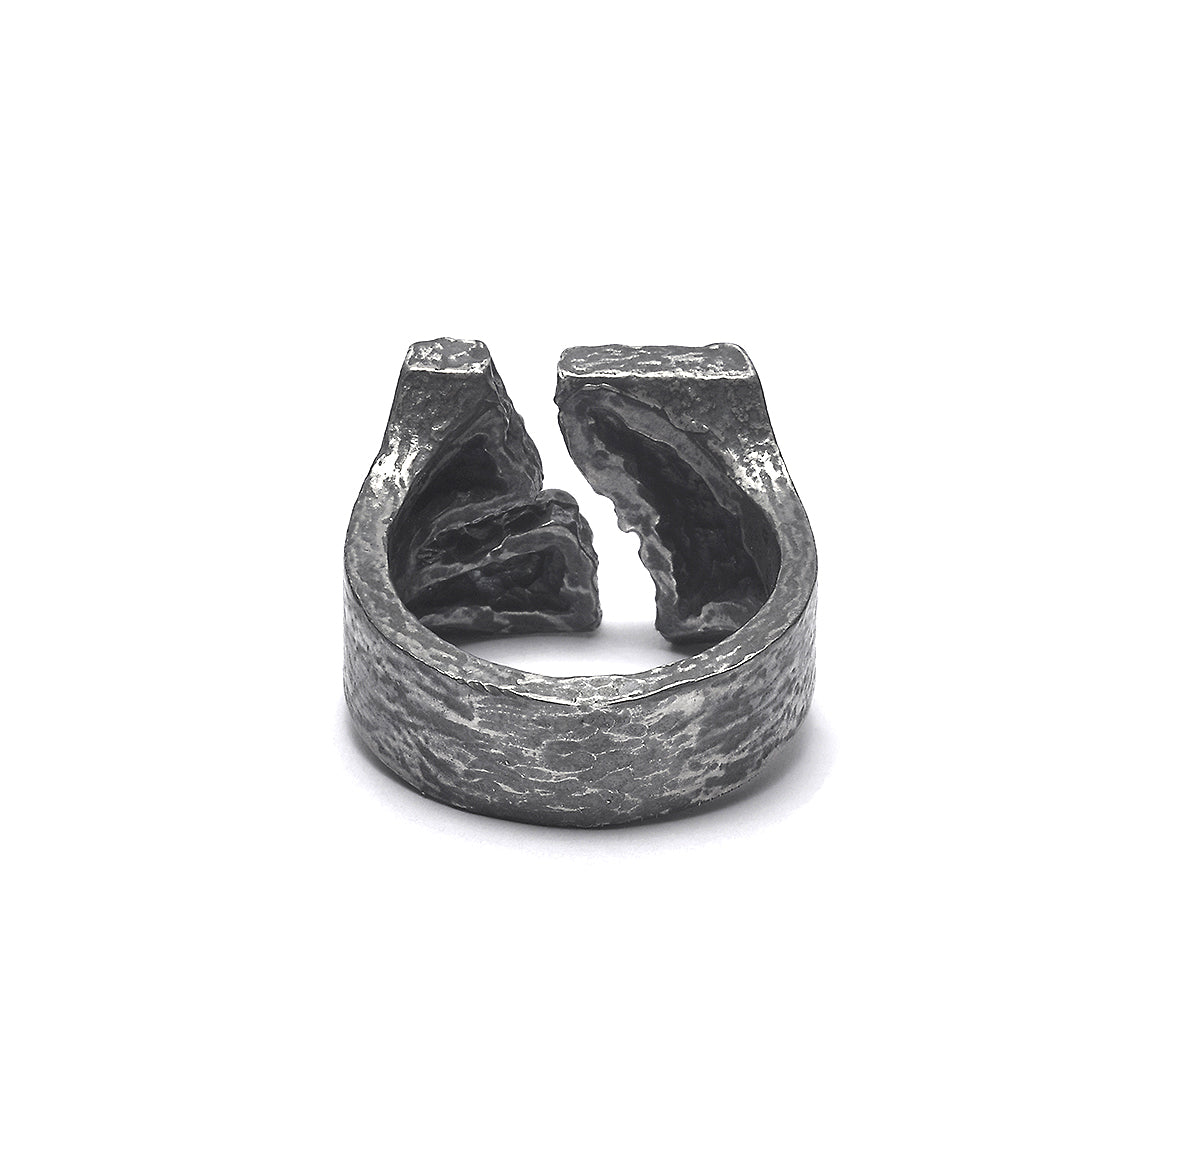 weathering - Square sterling silver signet ring - Avant Gardist